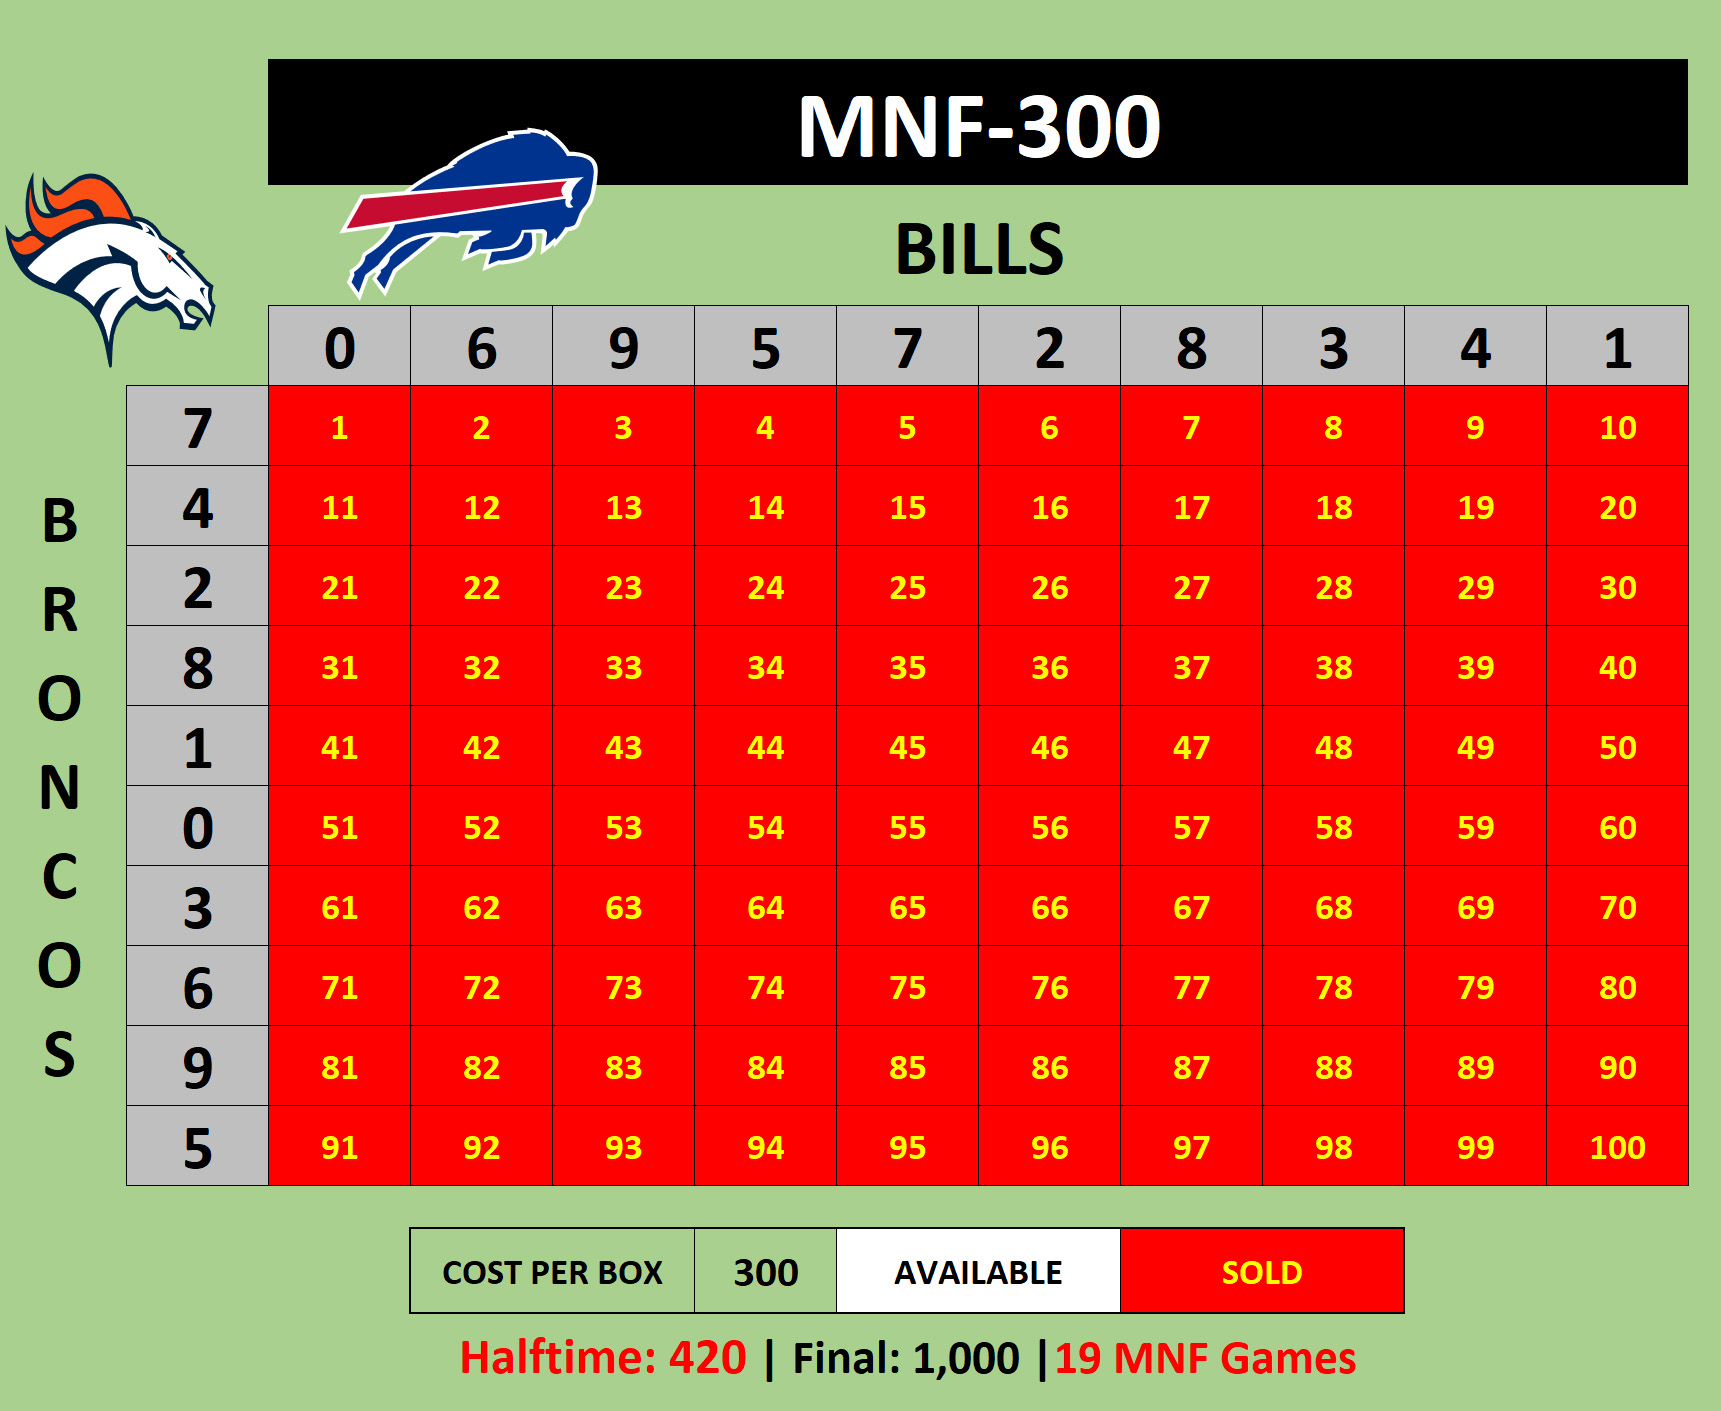 MNF-300 Broncos at Bills